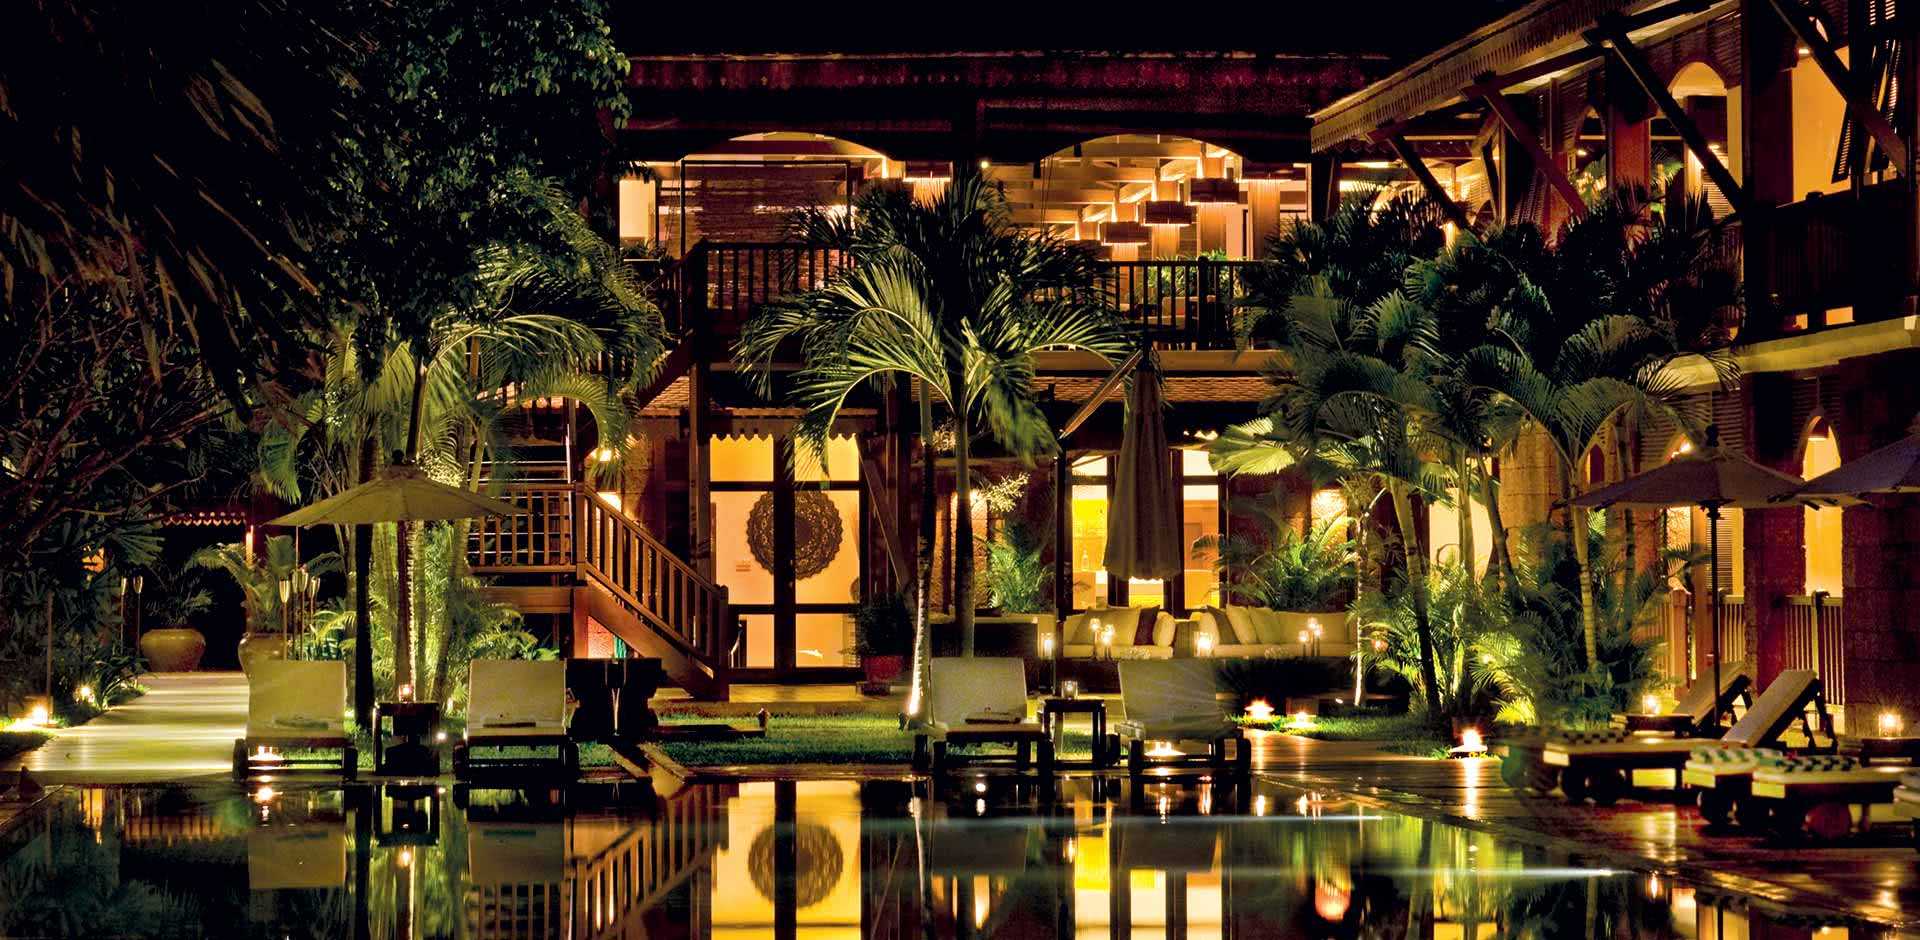 La Residence d'Angkor, A Belmond Hotel, Siem Reap in Cambodia